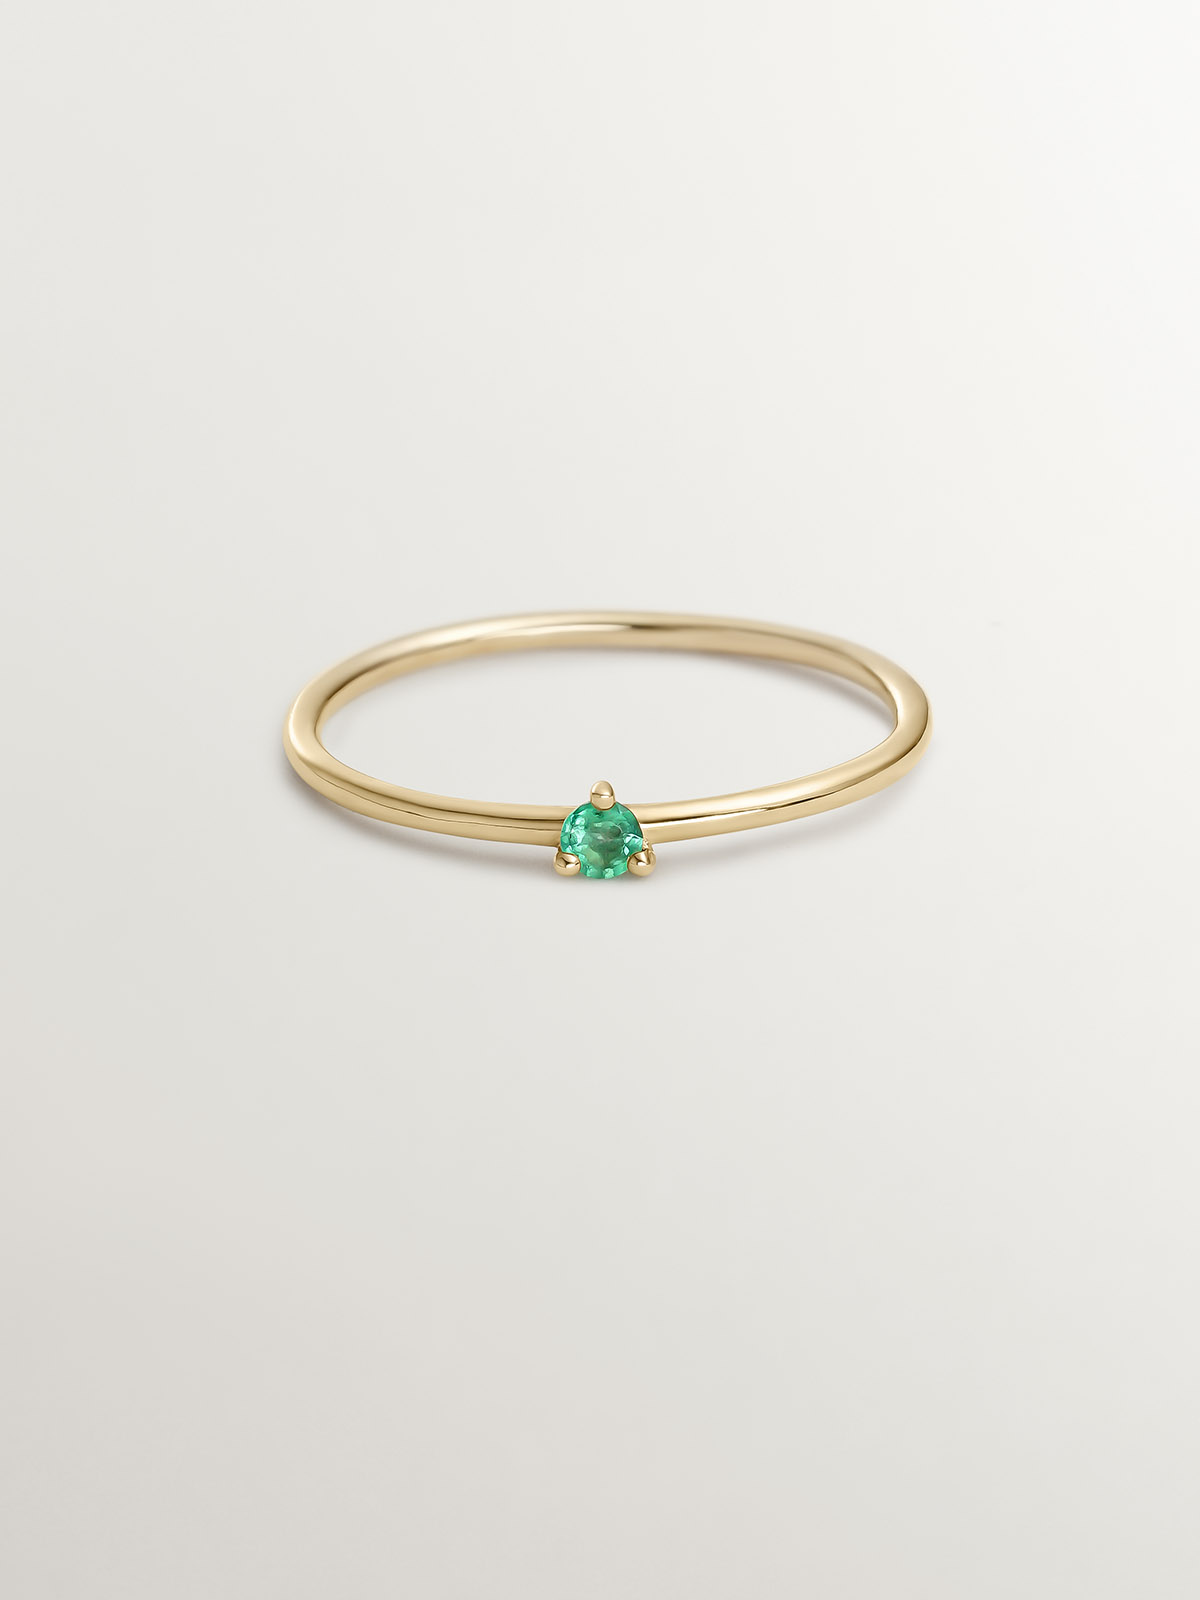 9K gold emerald solitaire ring , J04068-02-EM, hi-res